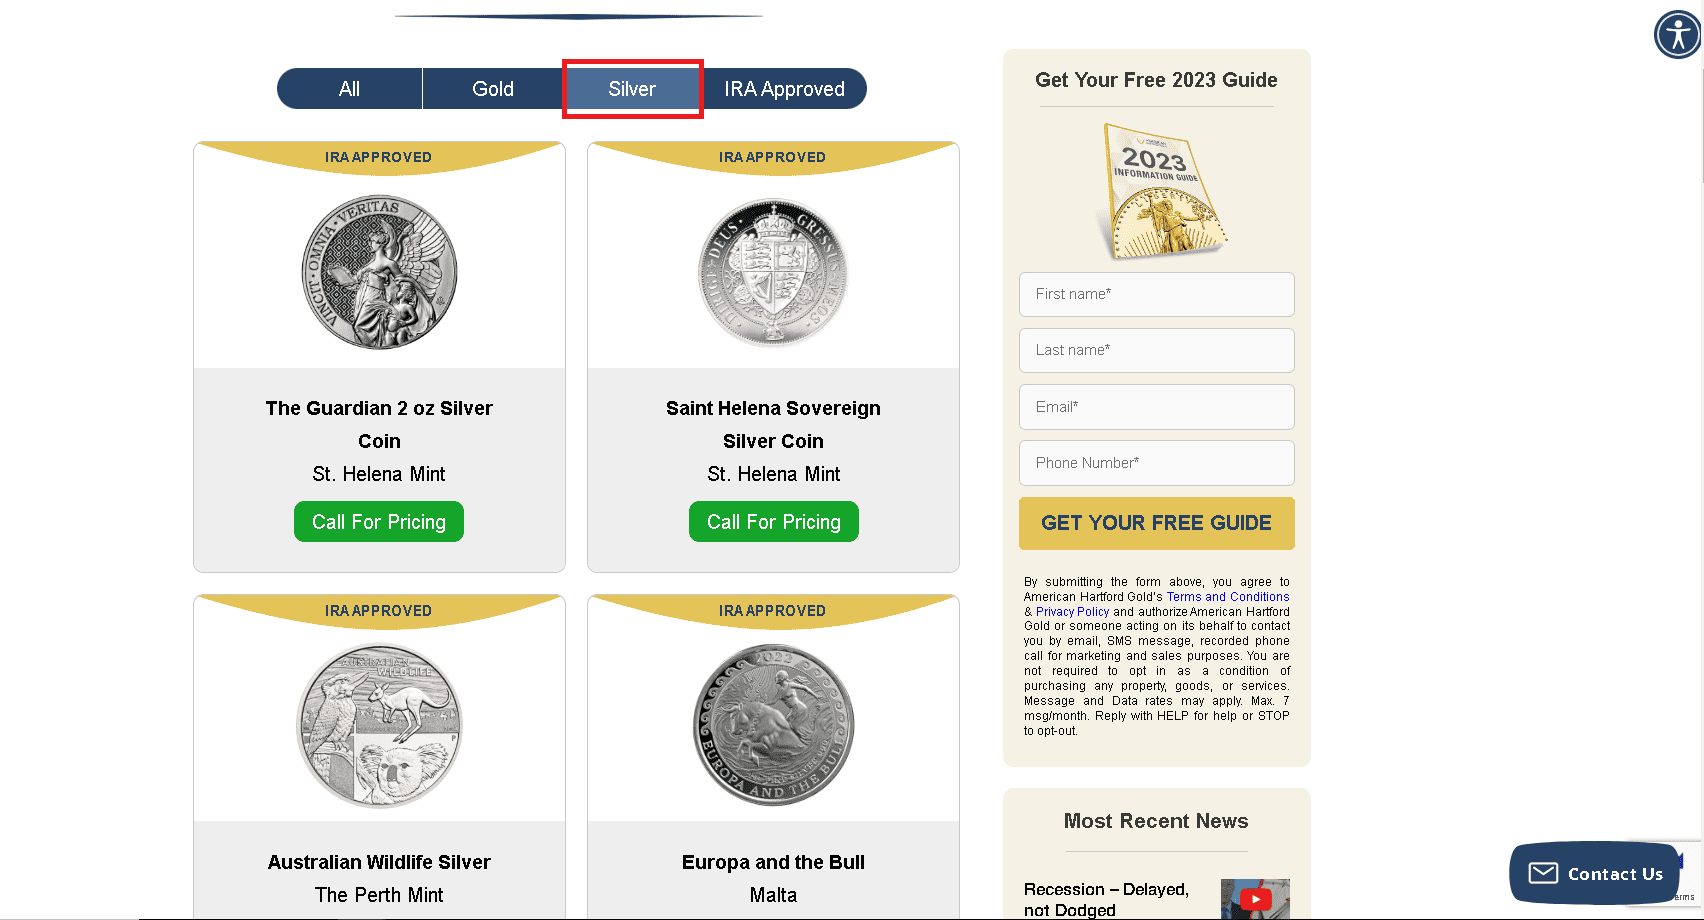 American Hartford Gold silver bullion